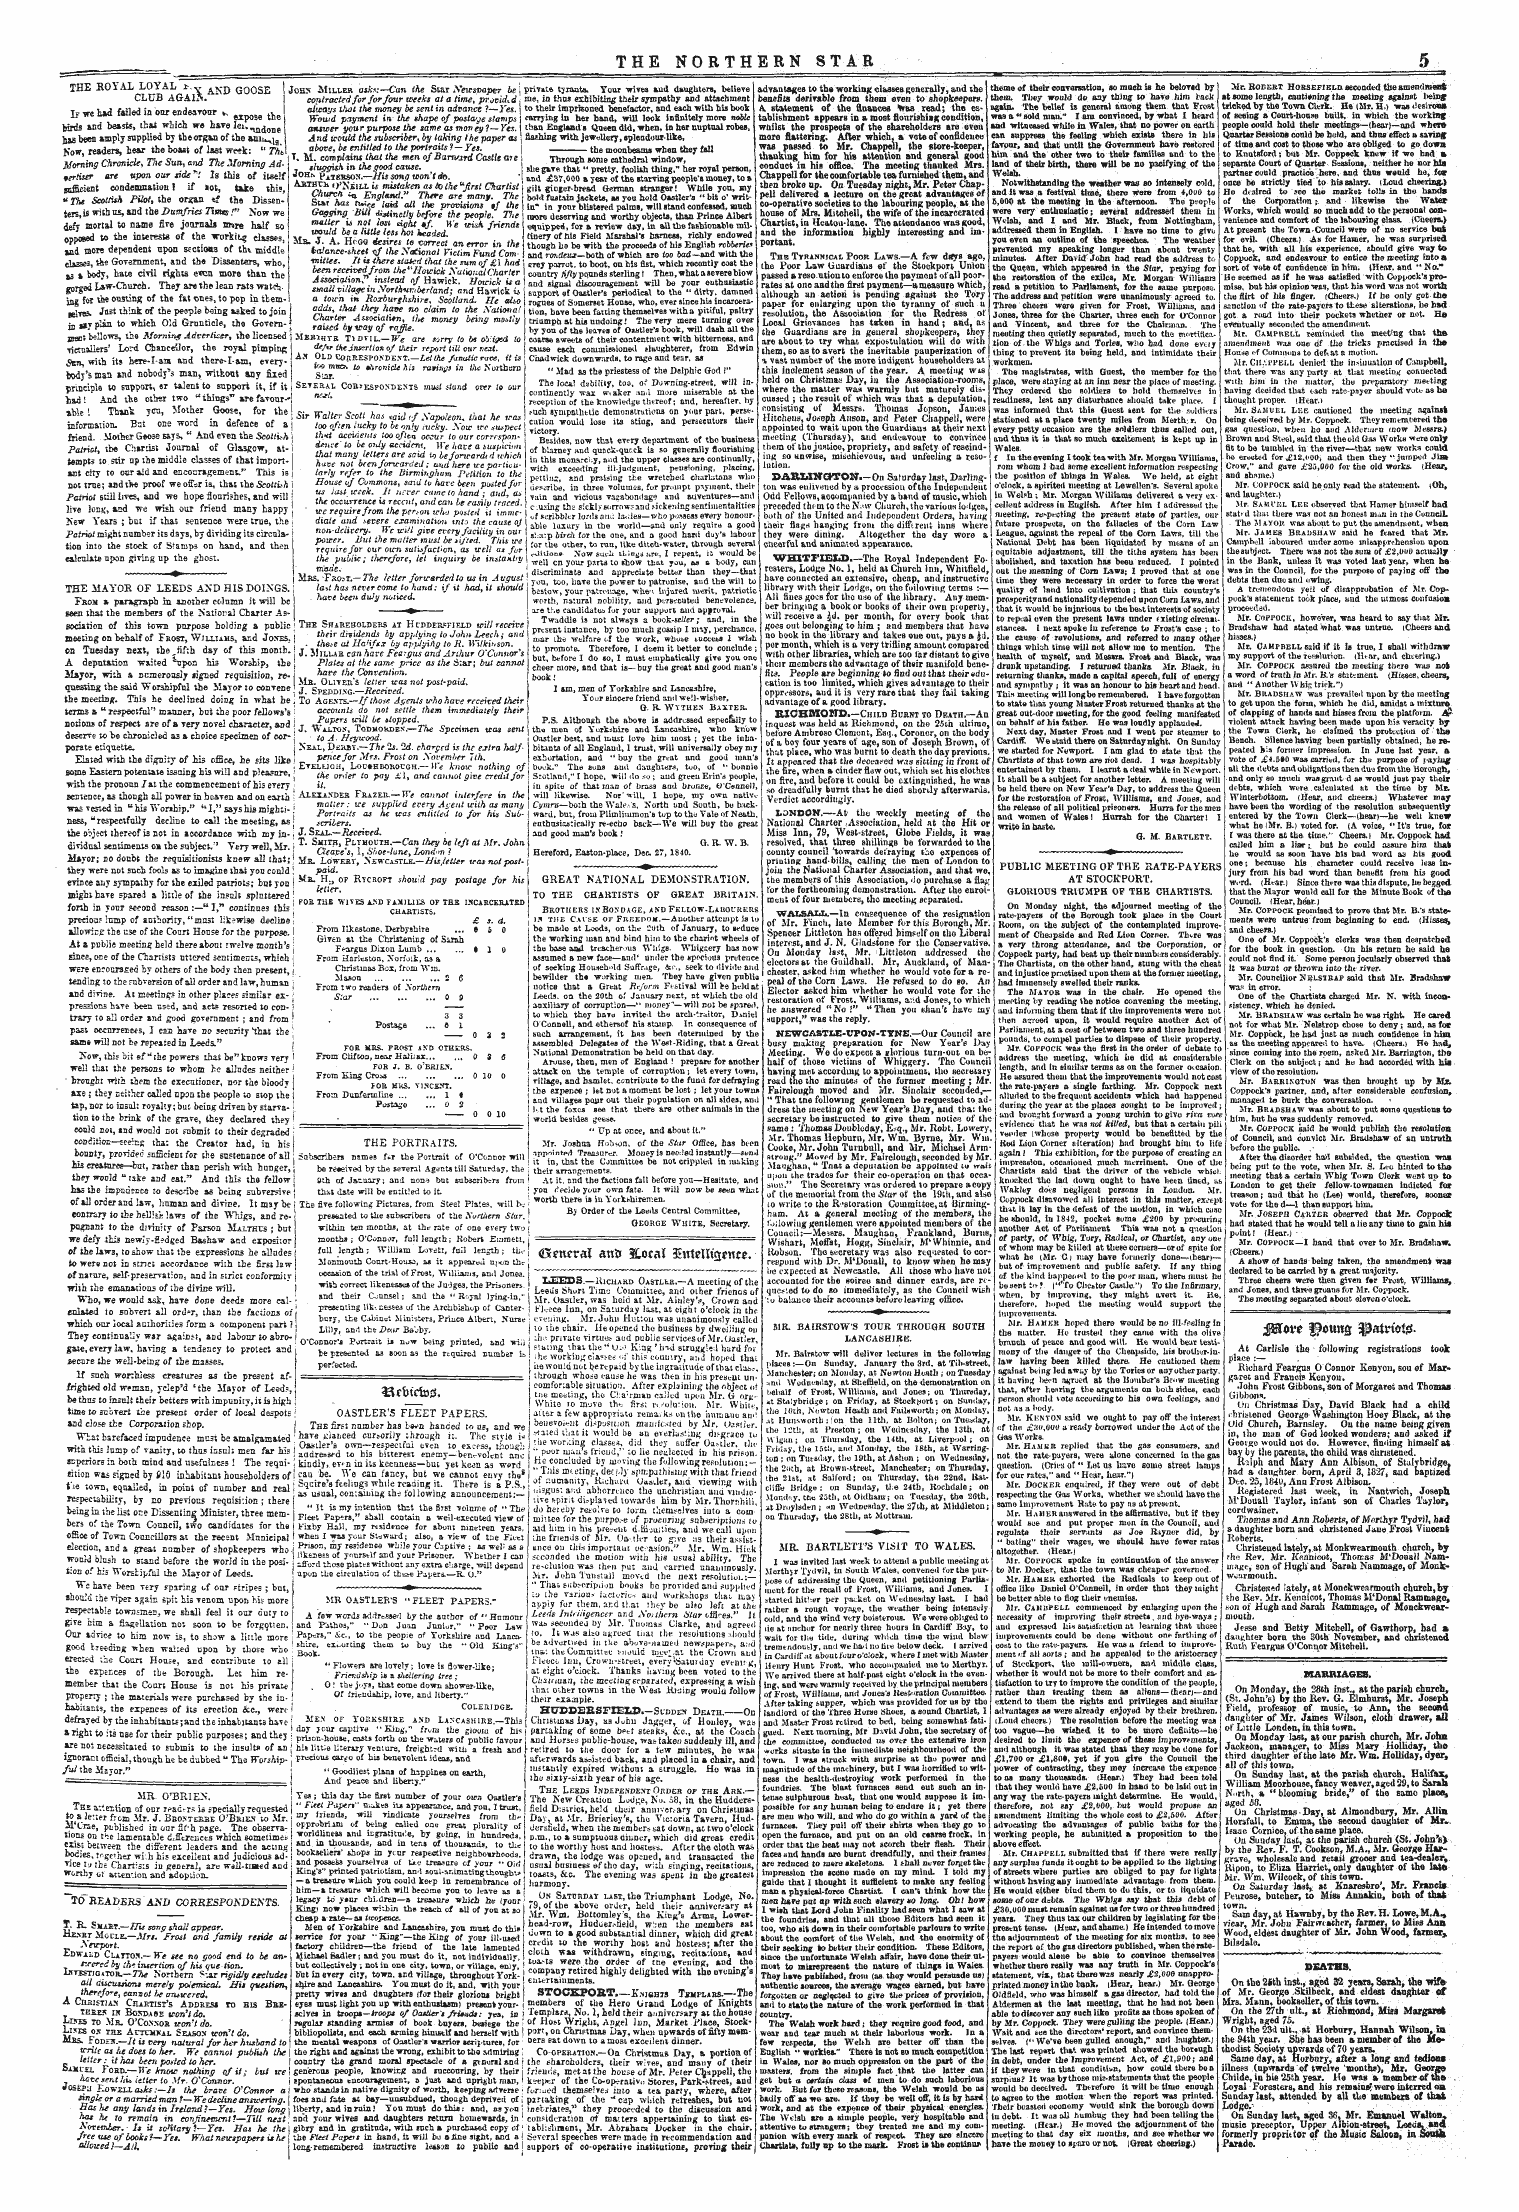 Northern Star (1837-1852): jS F Y, 2nd edition - General Att& 5locai Fofteutacuct.